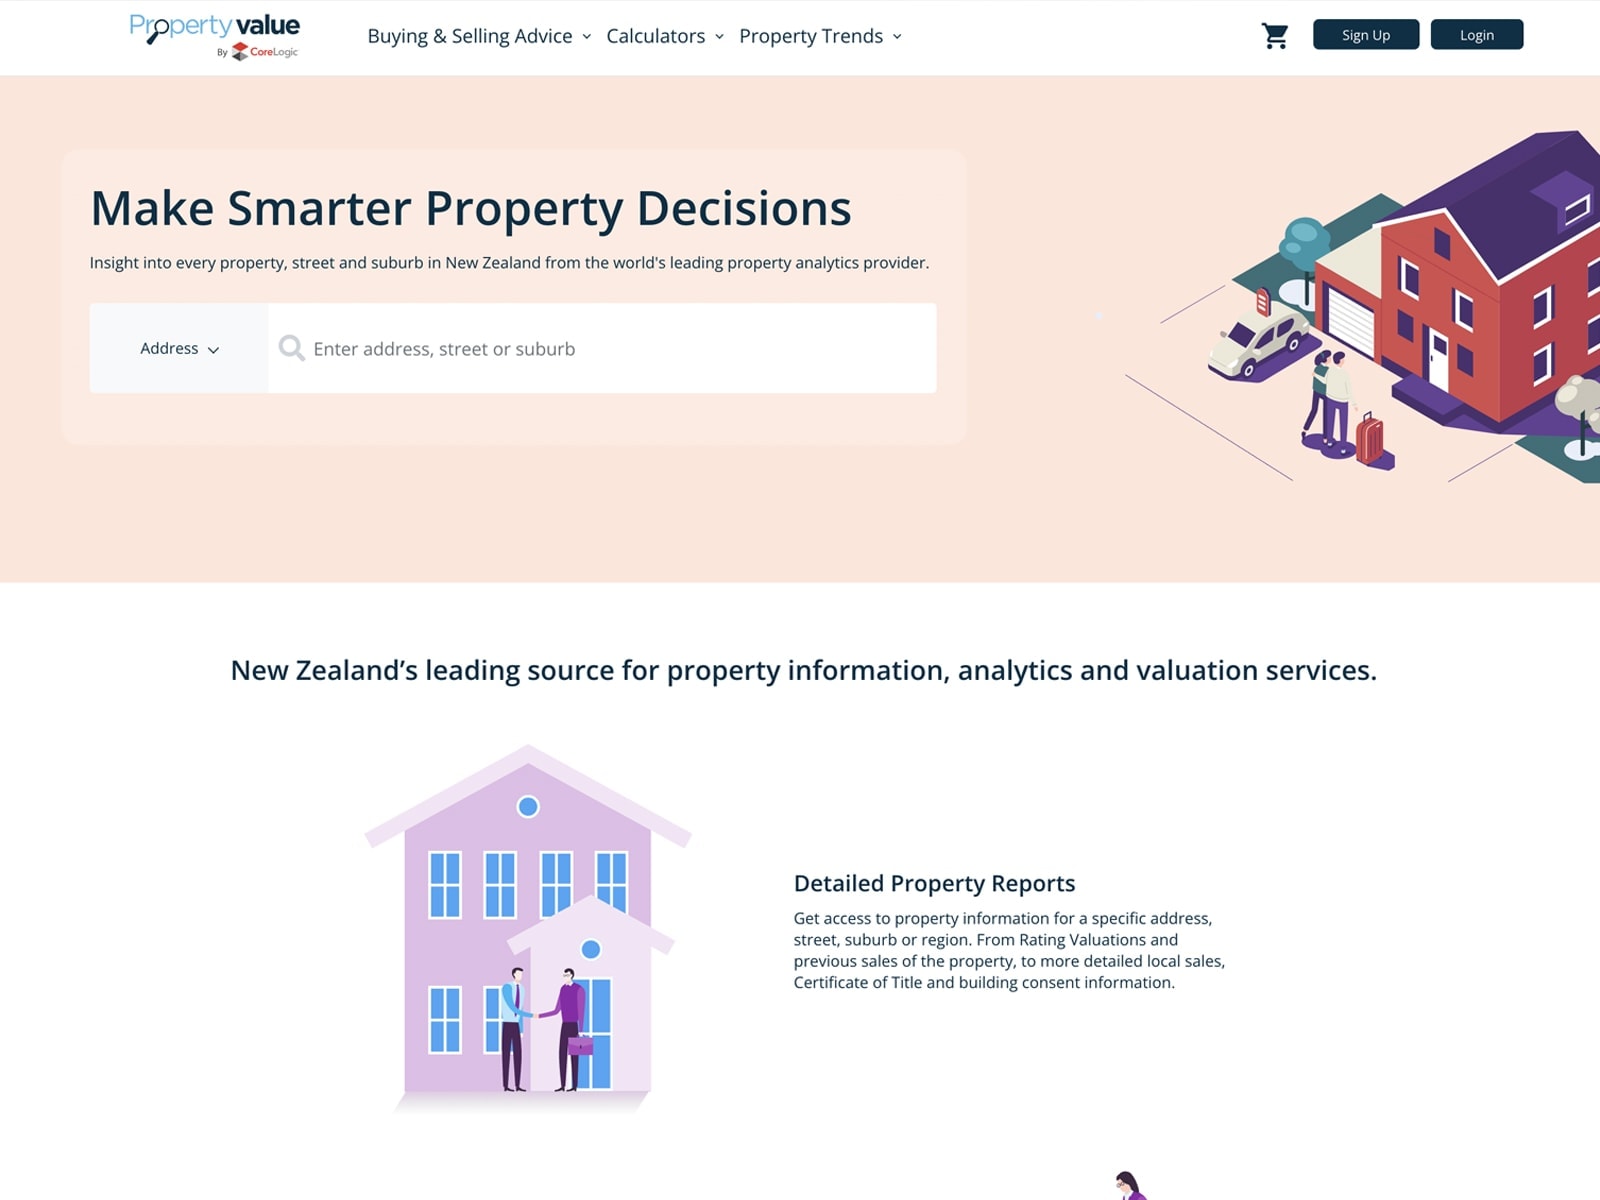 PropertyValue.co.nz website